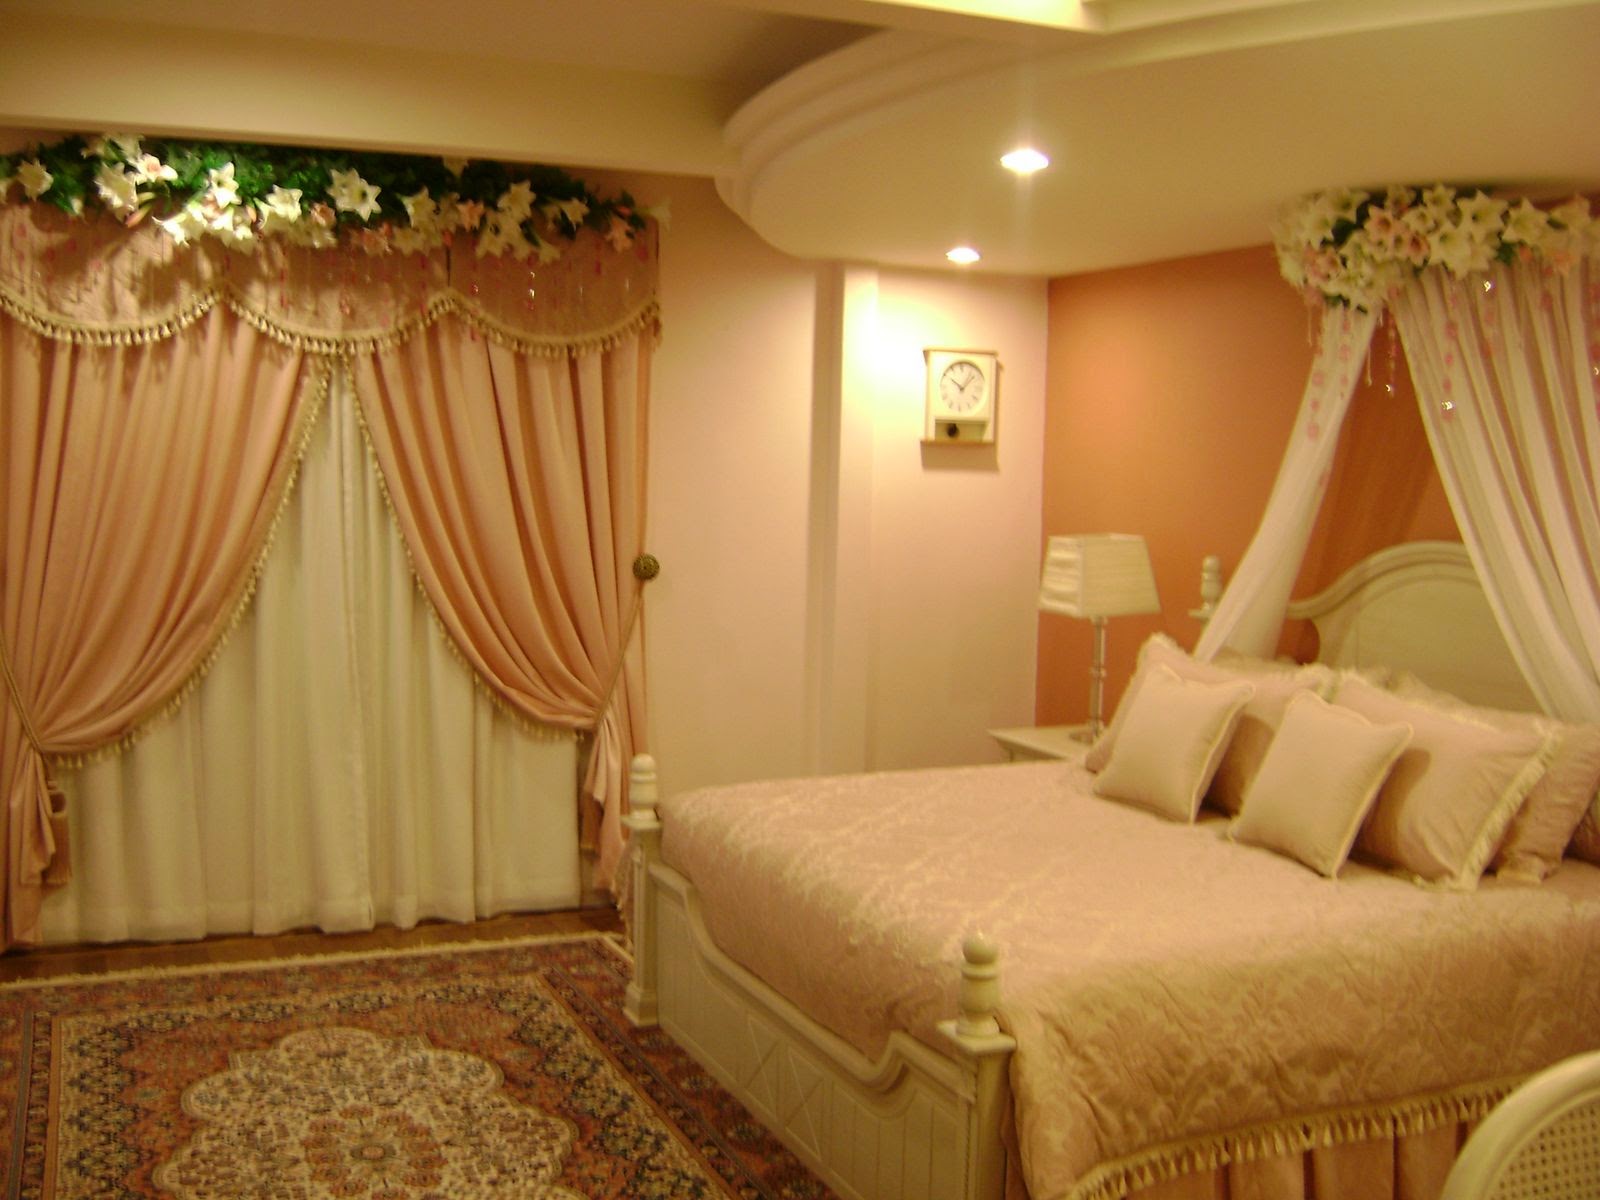 Romantic Bedroom Scenes Bride And Groom Room Decorations